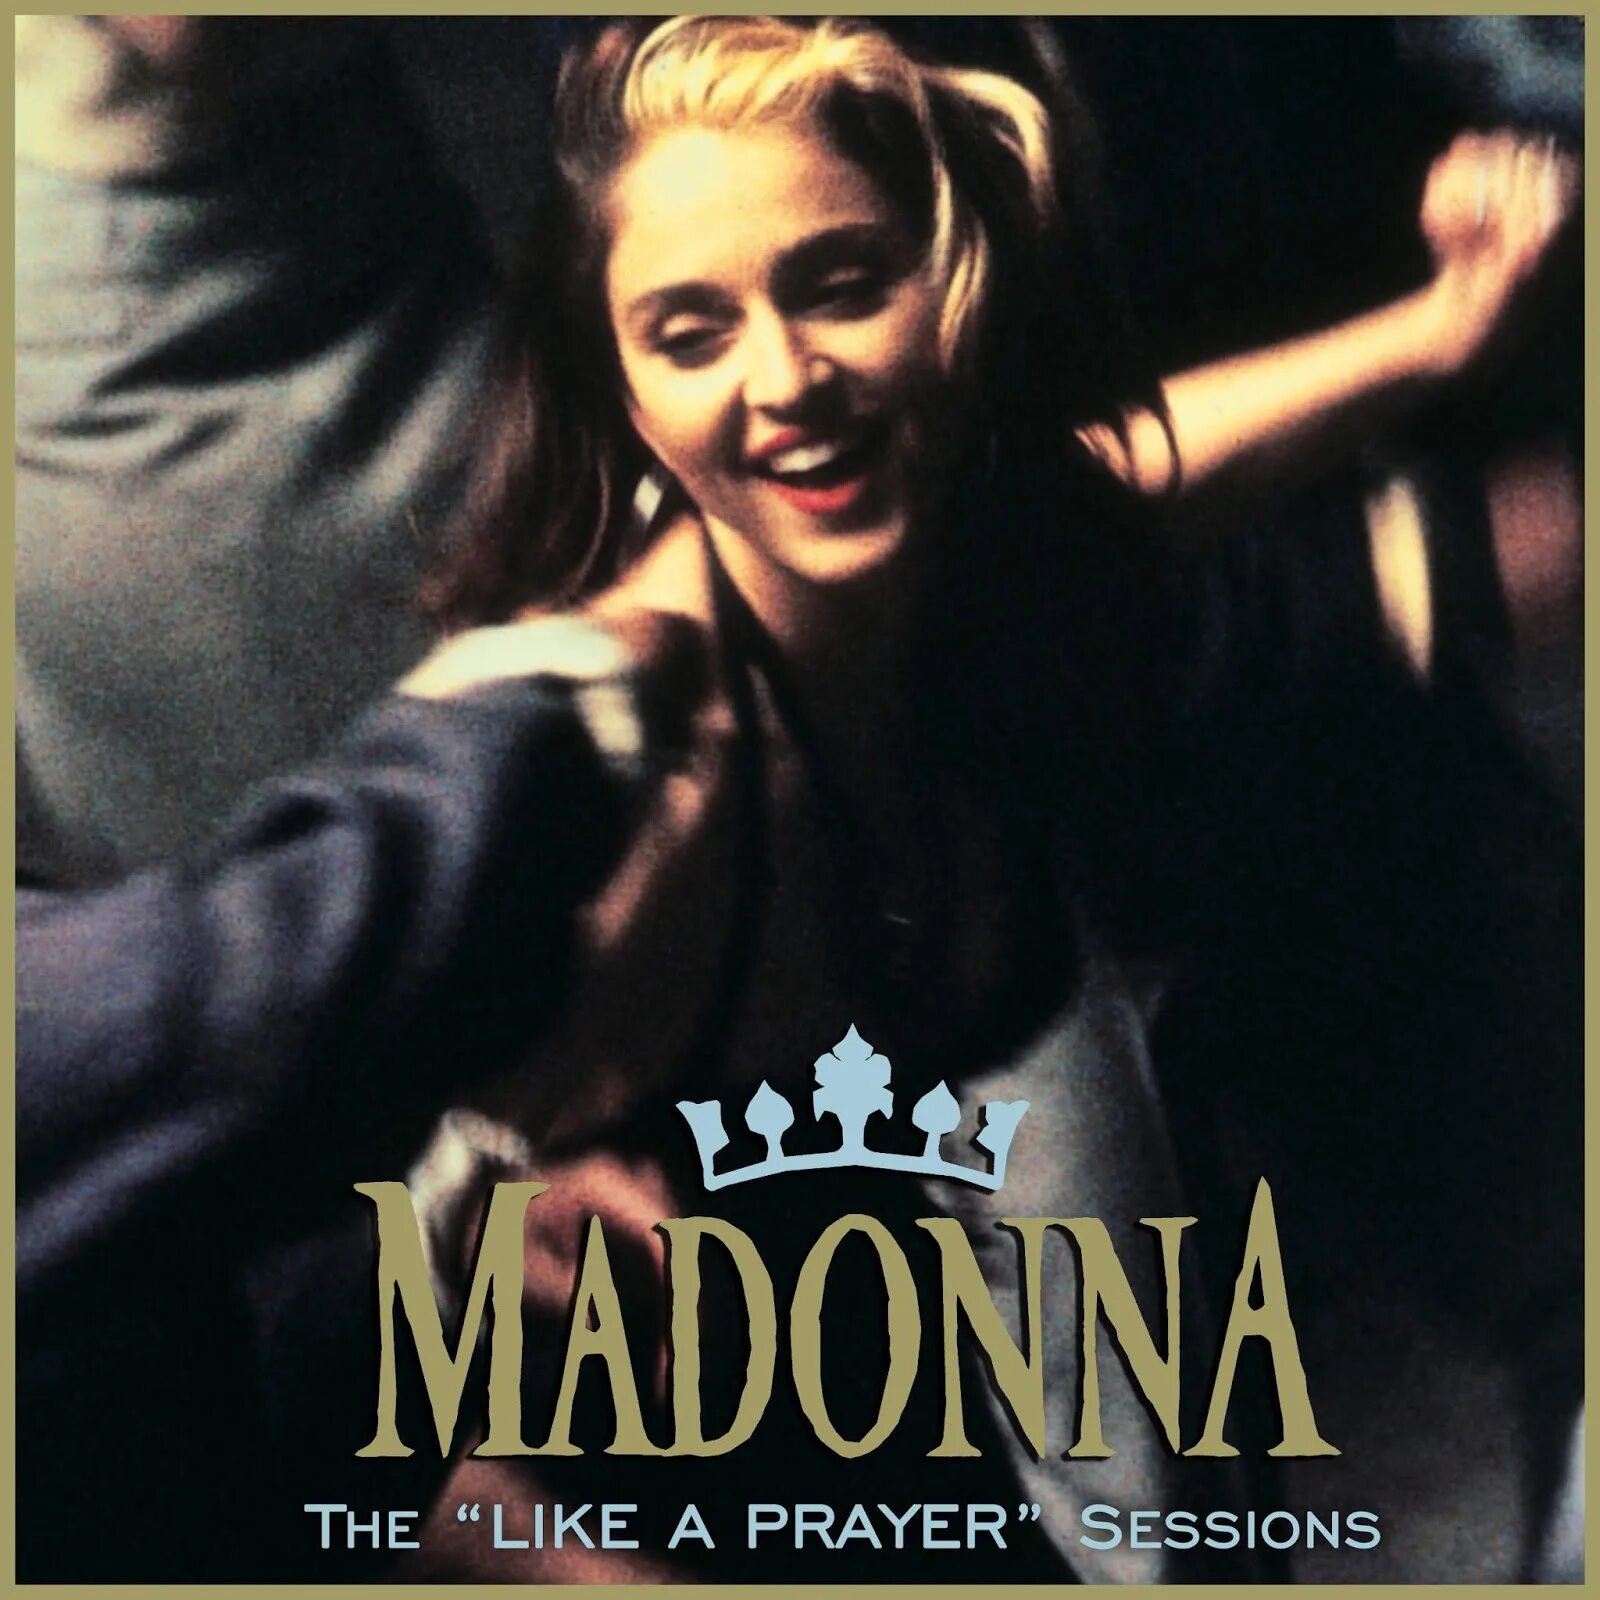 Like madonna песня. Мадонна like a Prayer. Мадонна альбом like a Prayer. Madonna like a Prayer обложка. CD Madonna: like a Prayer.